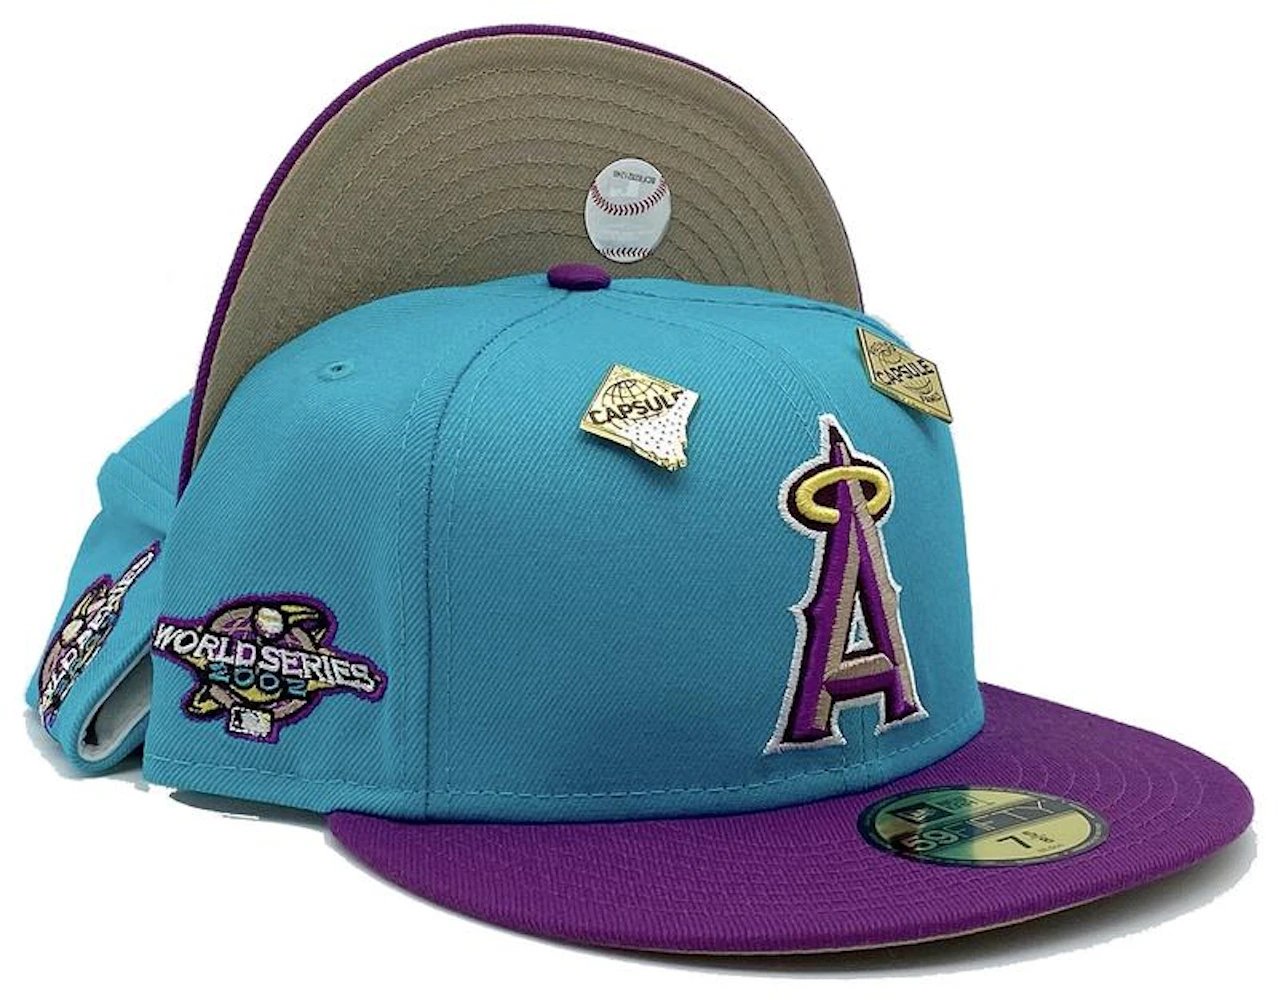 Anaheim Angels 2002 World Series cap, found at my local mall : r